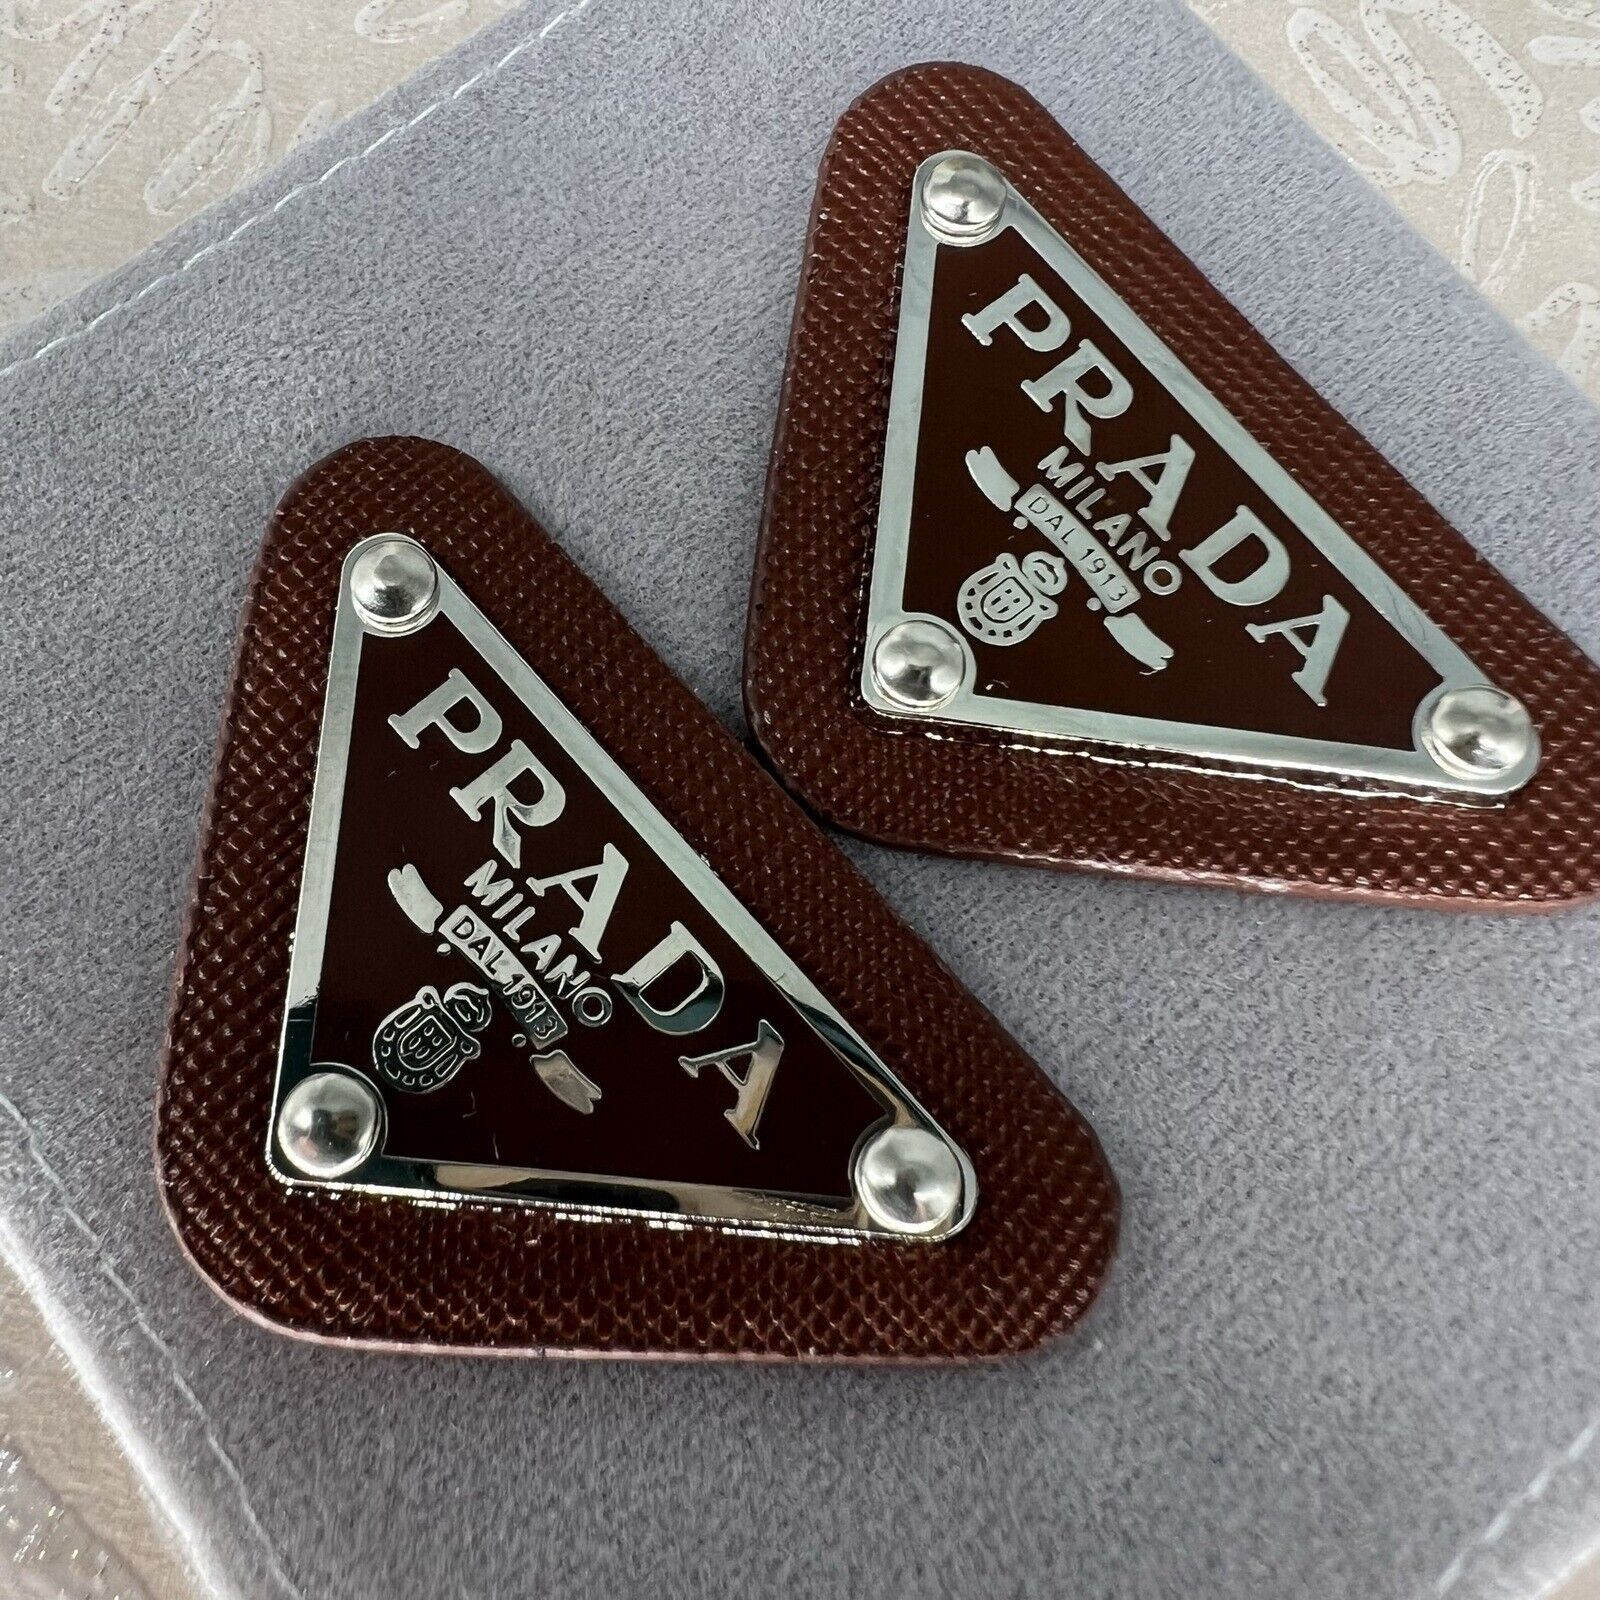 LOT 2 Prada Milano Logo little  Button Plate Metal Emblem Triangle Plate